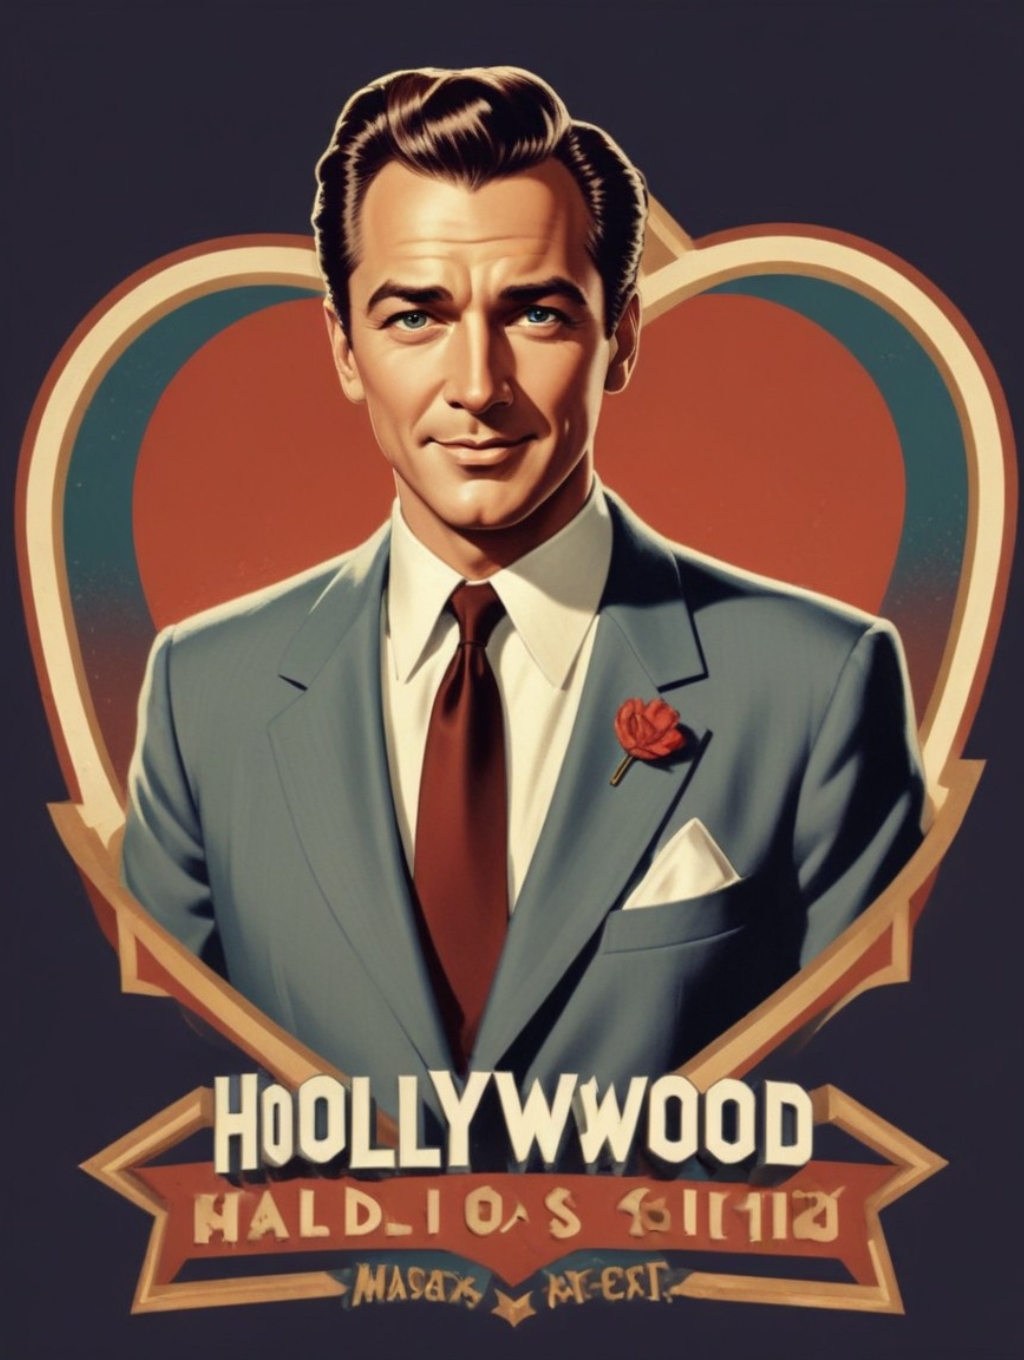 Hollywood Studio Logo Men: Photo Display & Gallery Frames-Theme:5